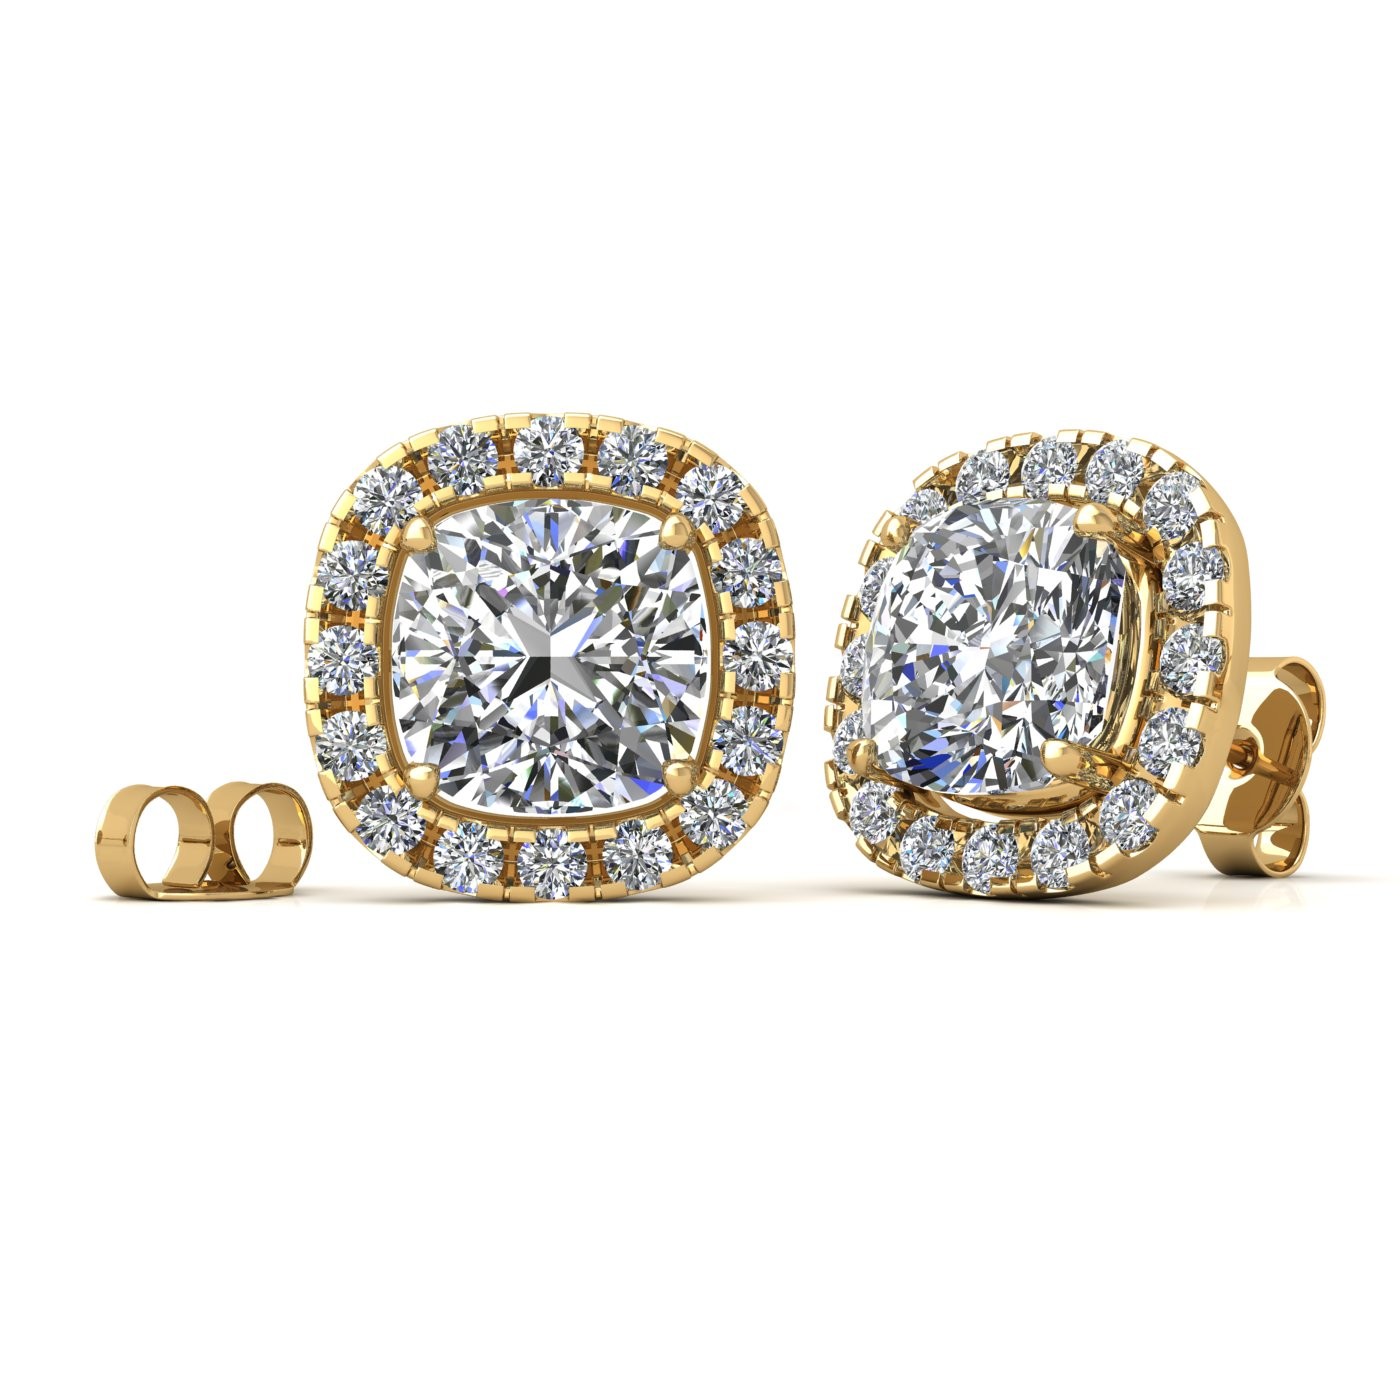 18k rose gold  2,0 ct each (4,0 tcw) 4 prongs cushion shape diamond earrings with diamond pavÉ set halo Photos & images